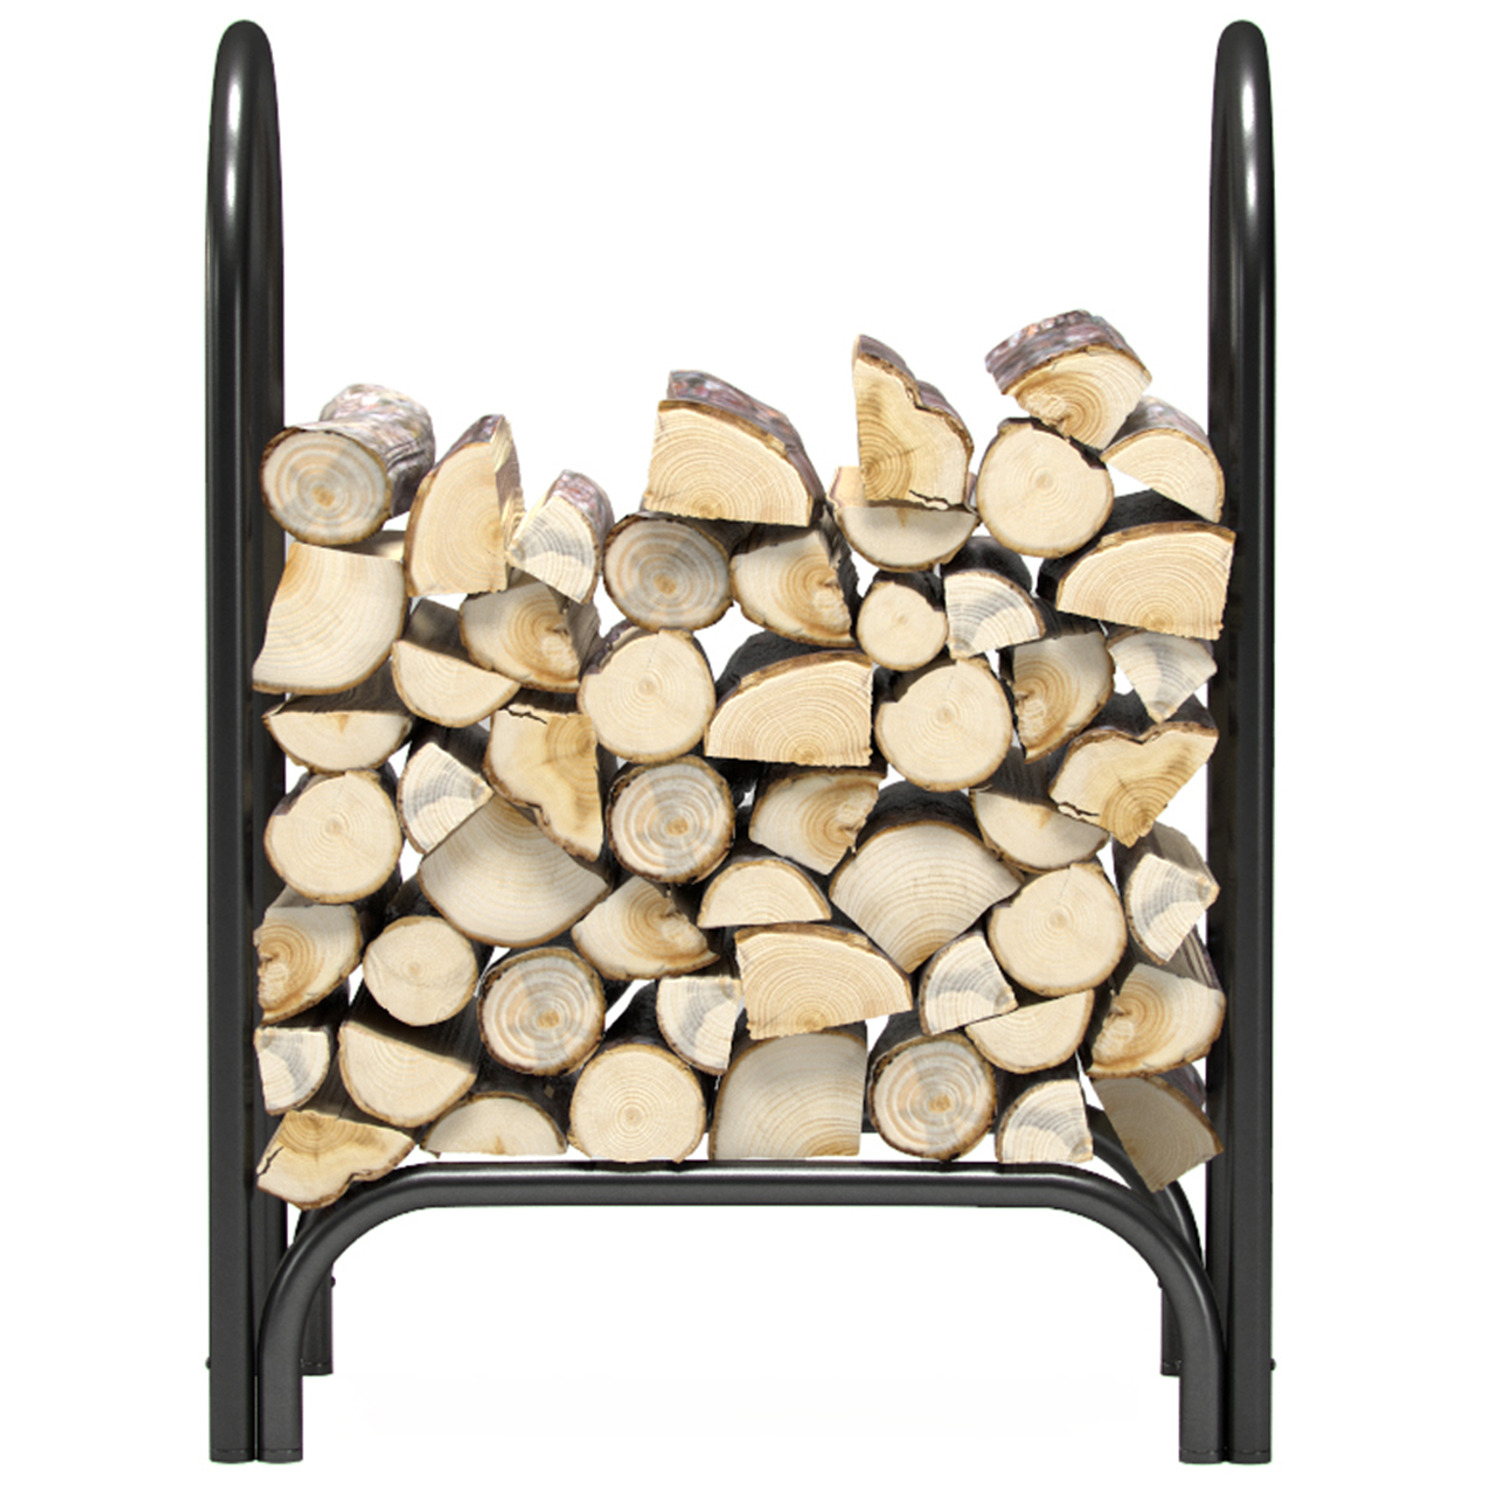 28 Inch Indoor Outdoor Firewood Shelter Log Rack - image 1 of 5